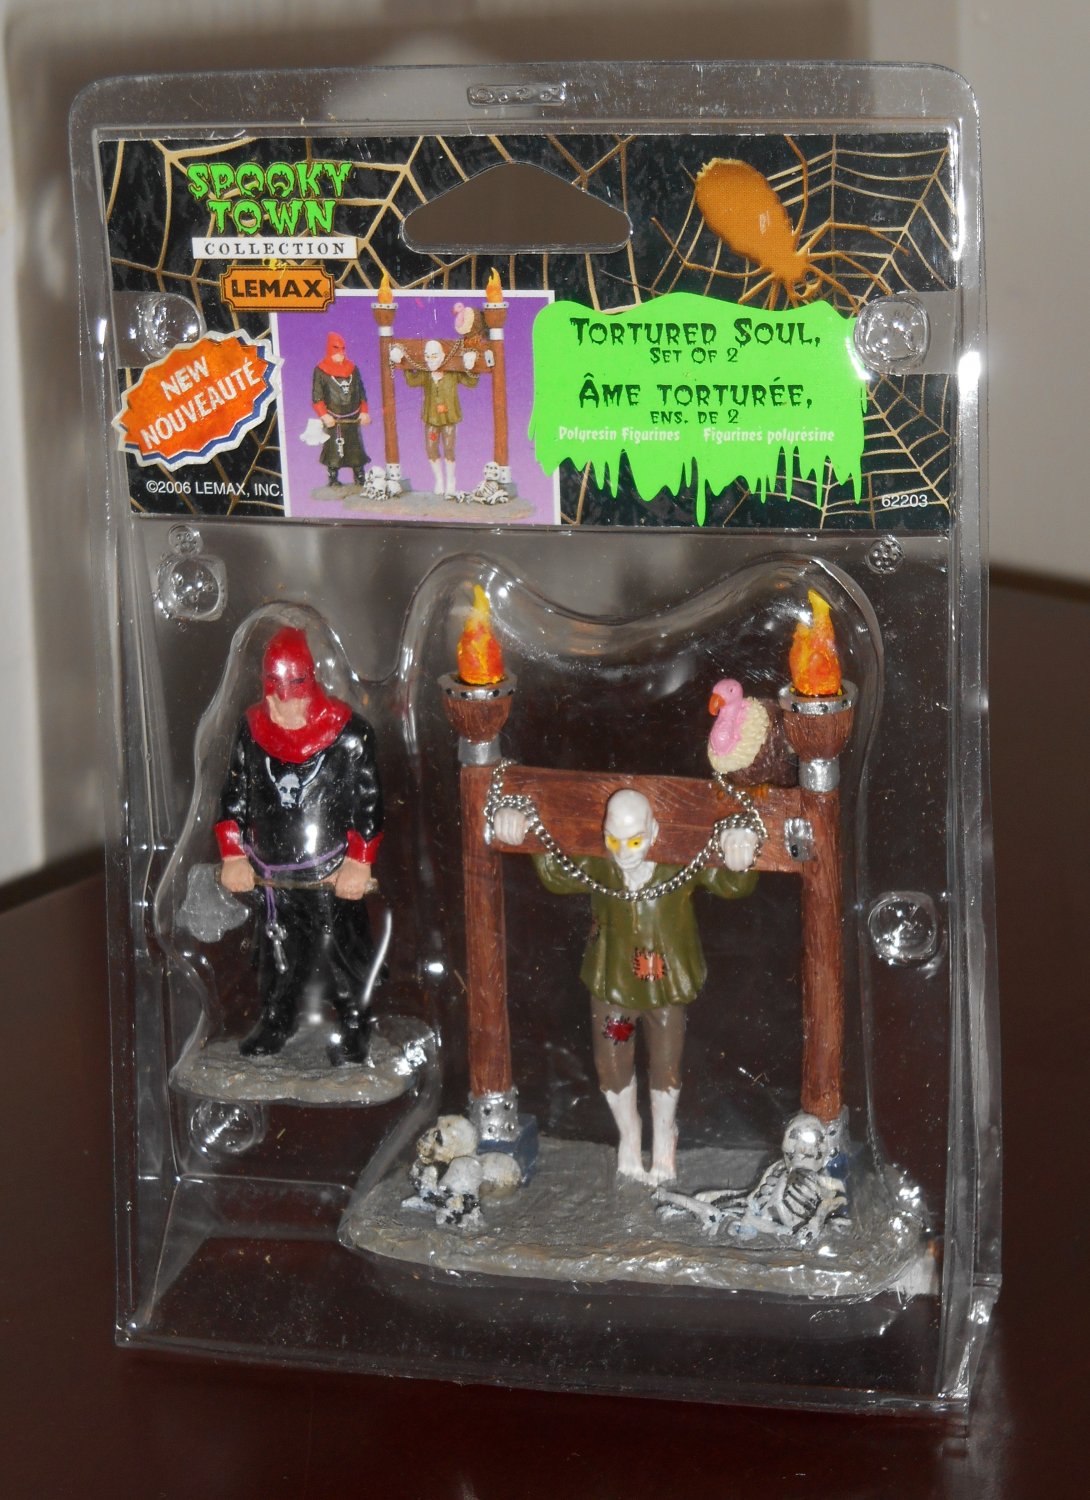 Lemax Spooky Town Village Tortured Soul 2-Piece Figurine Set #62203 